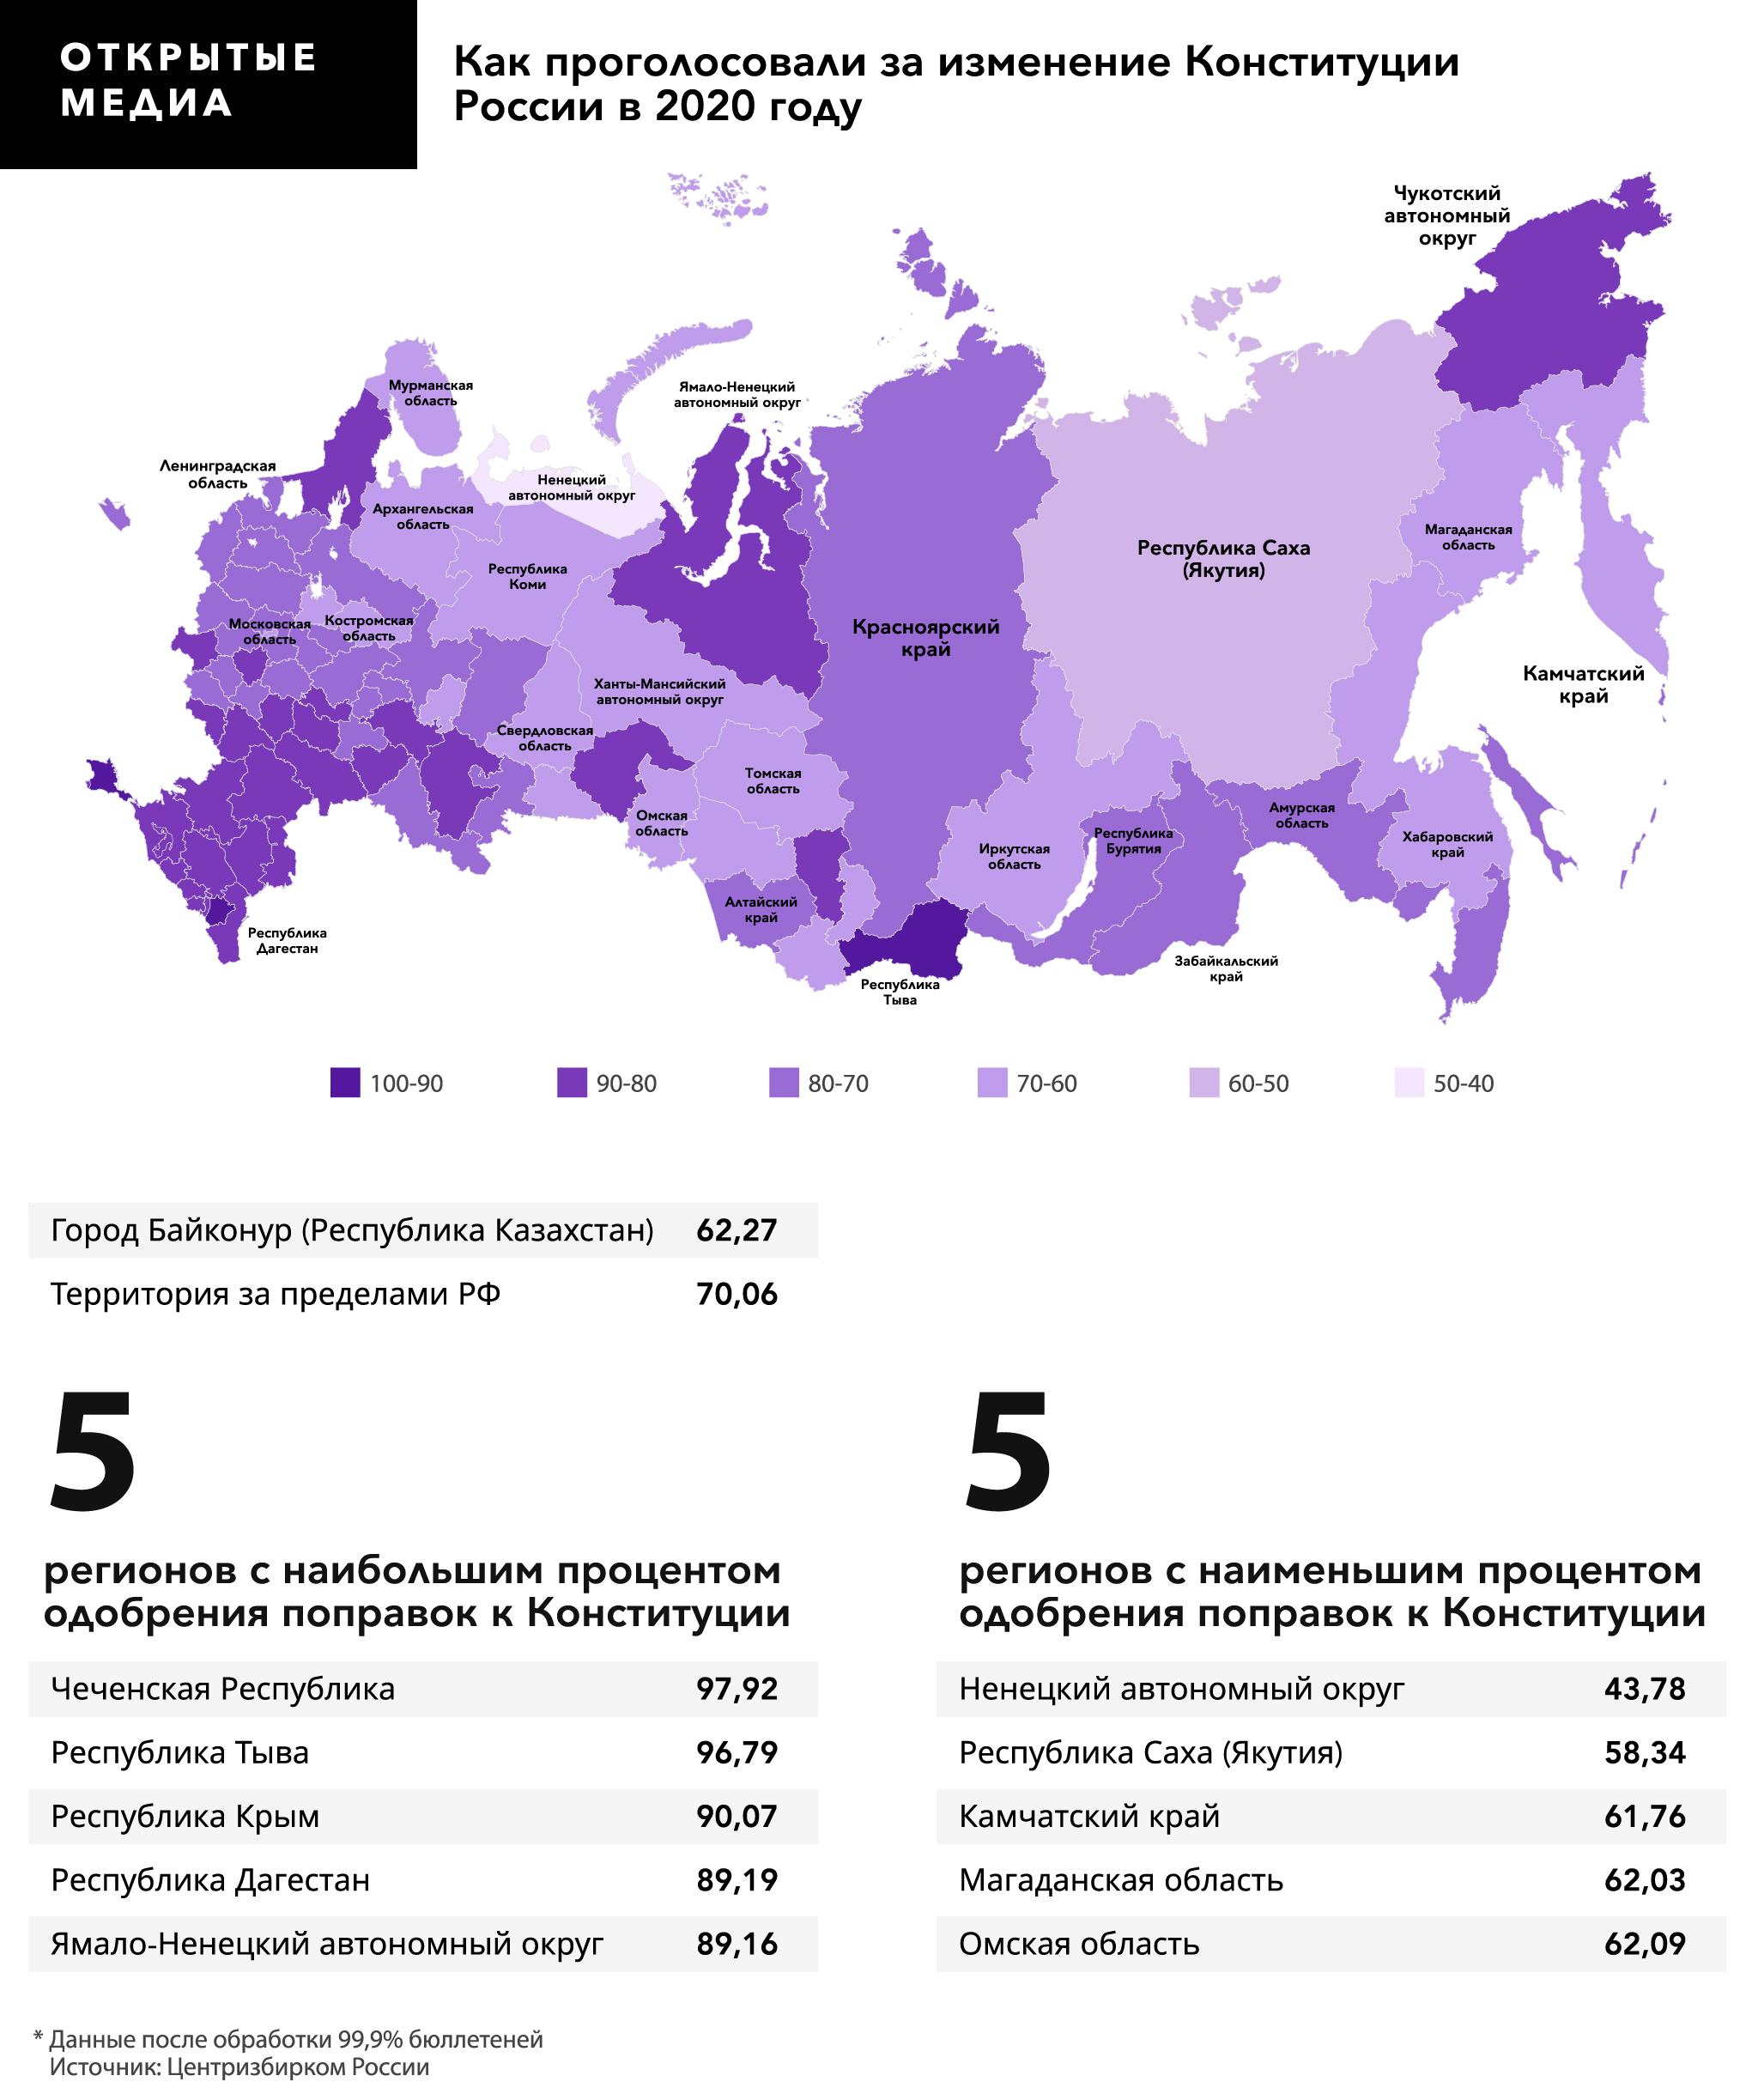 Где сколько проголосовало. Ujkjcjdfybt GJ htubjufv]. Статистика голосования по регионам. Голосование по регионамонам. Голосование за Путина по регионам.